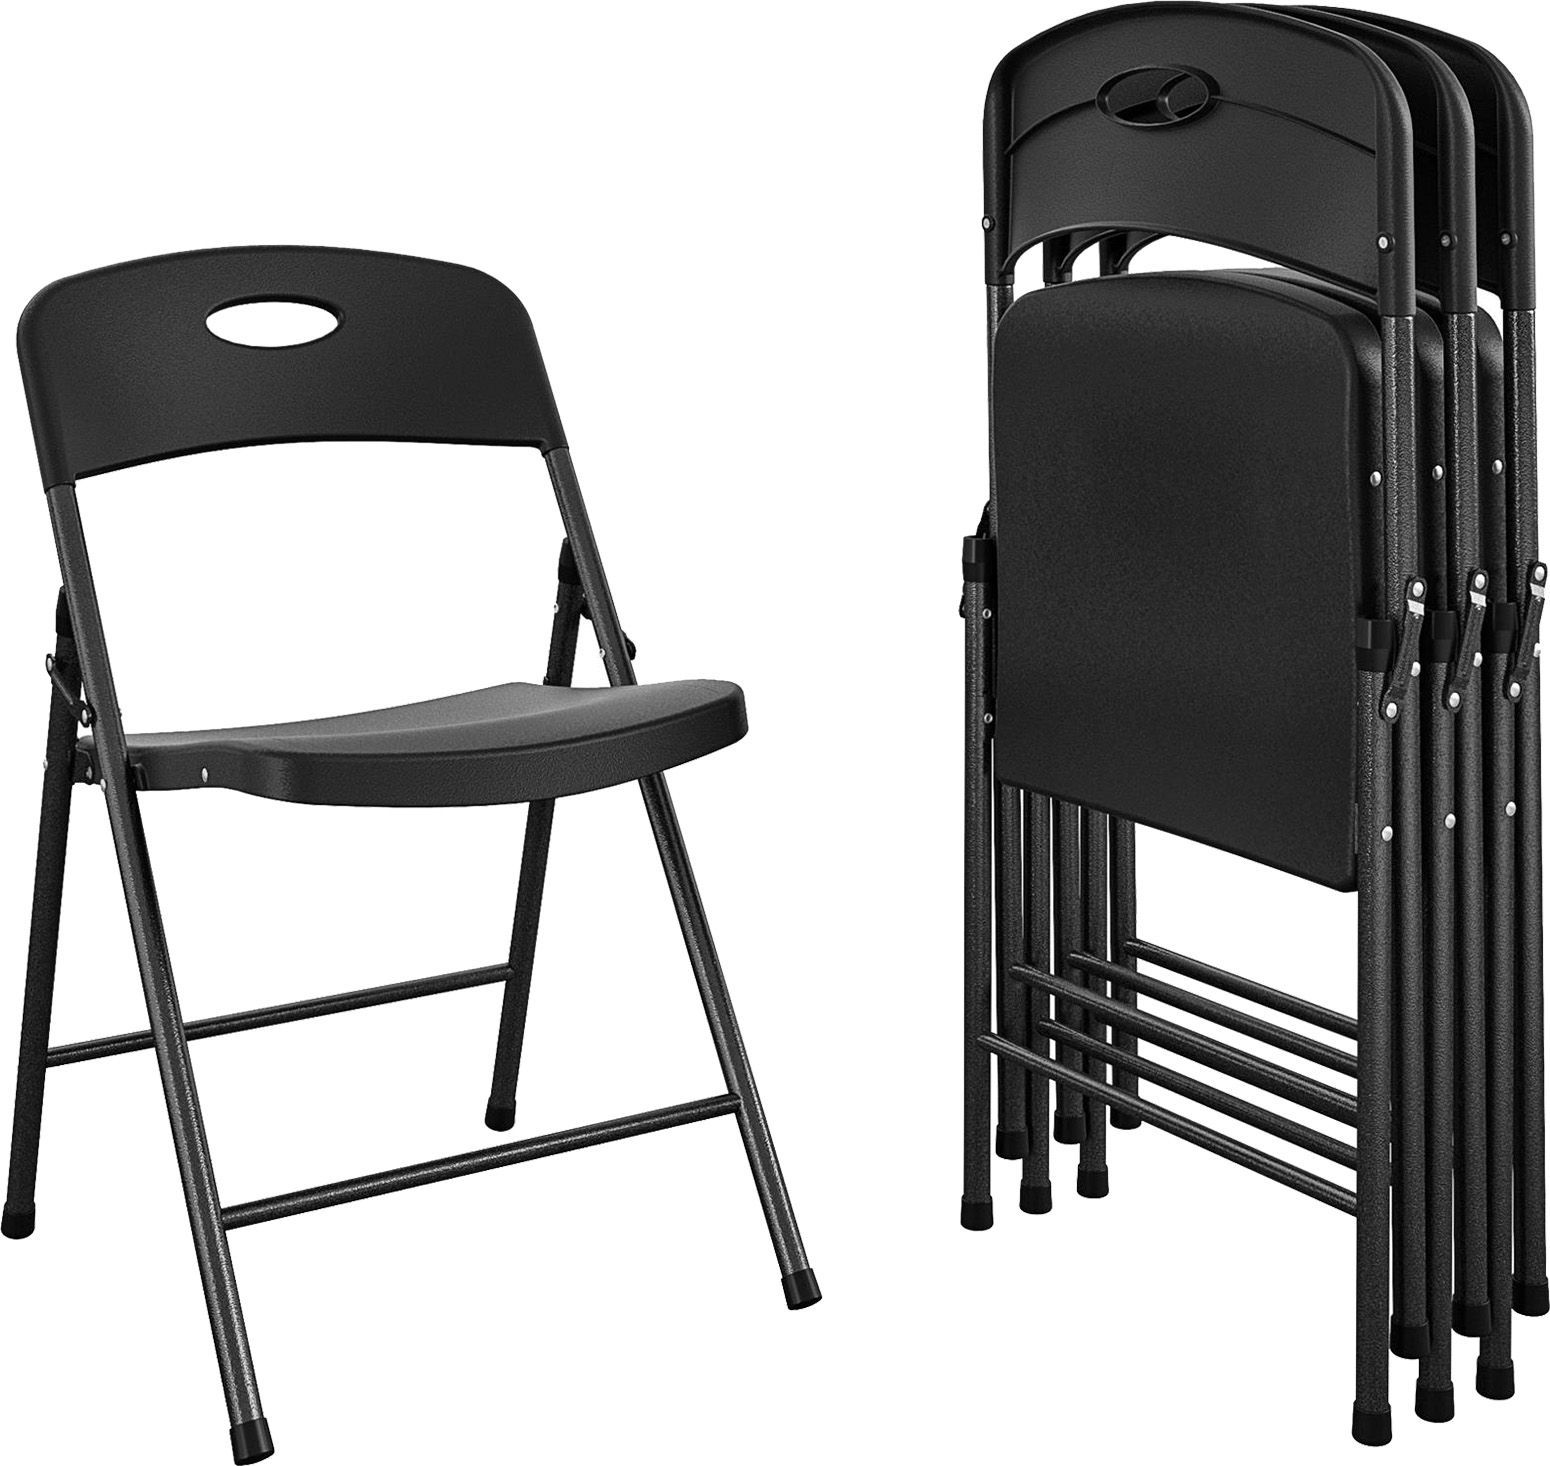 Photos - Chair Cosco Solid Resin Plastic Folding  4-Pack, Black 23UQWUDBLBRCDFLDNREC 